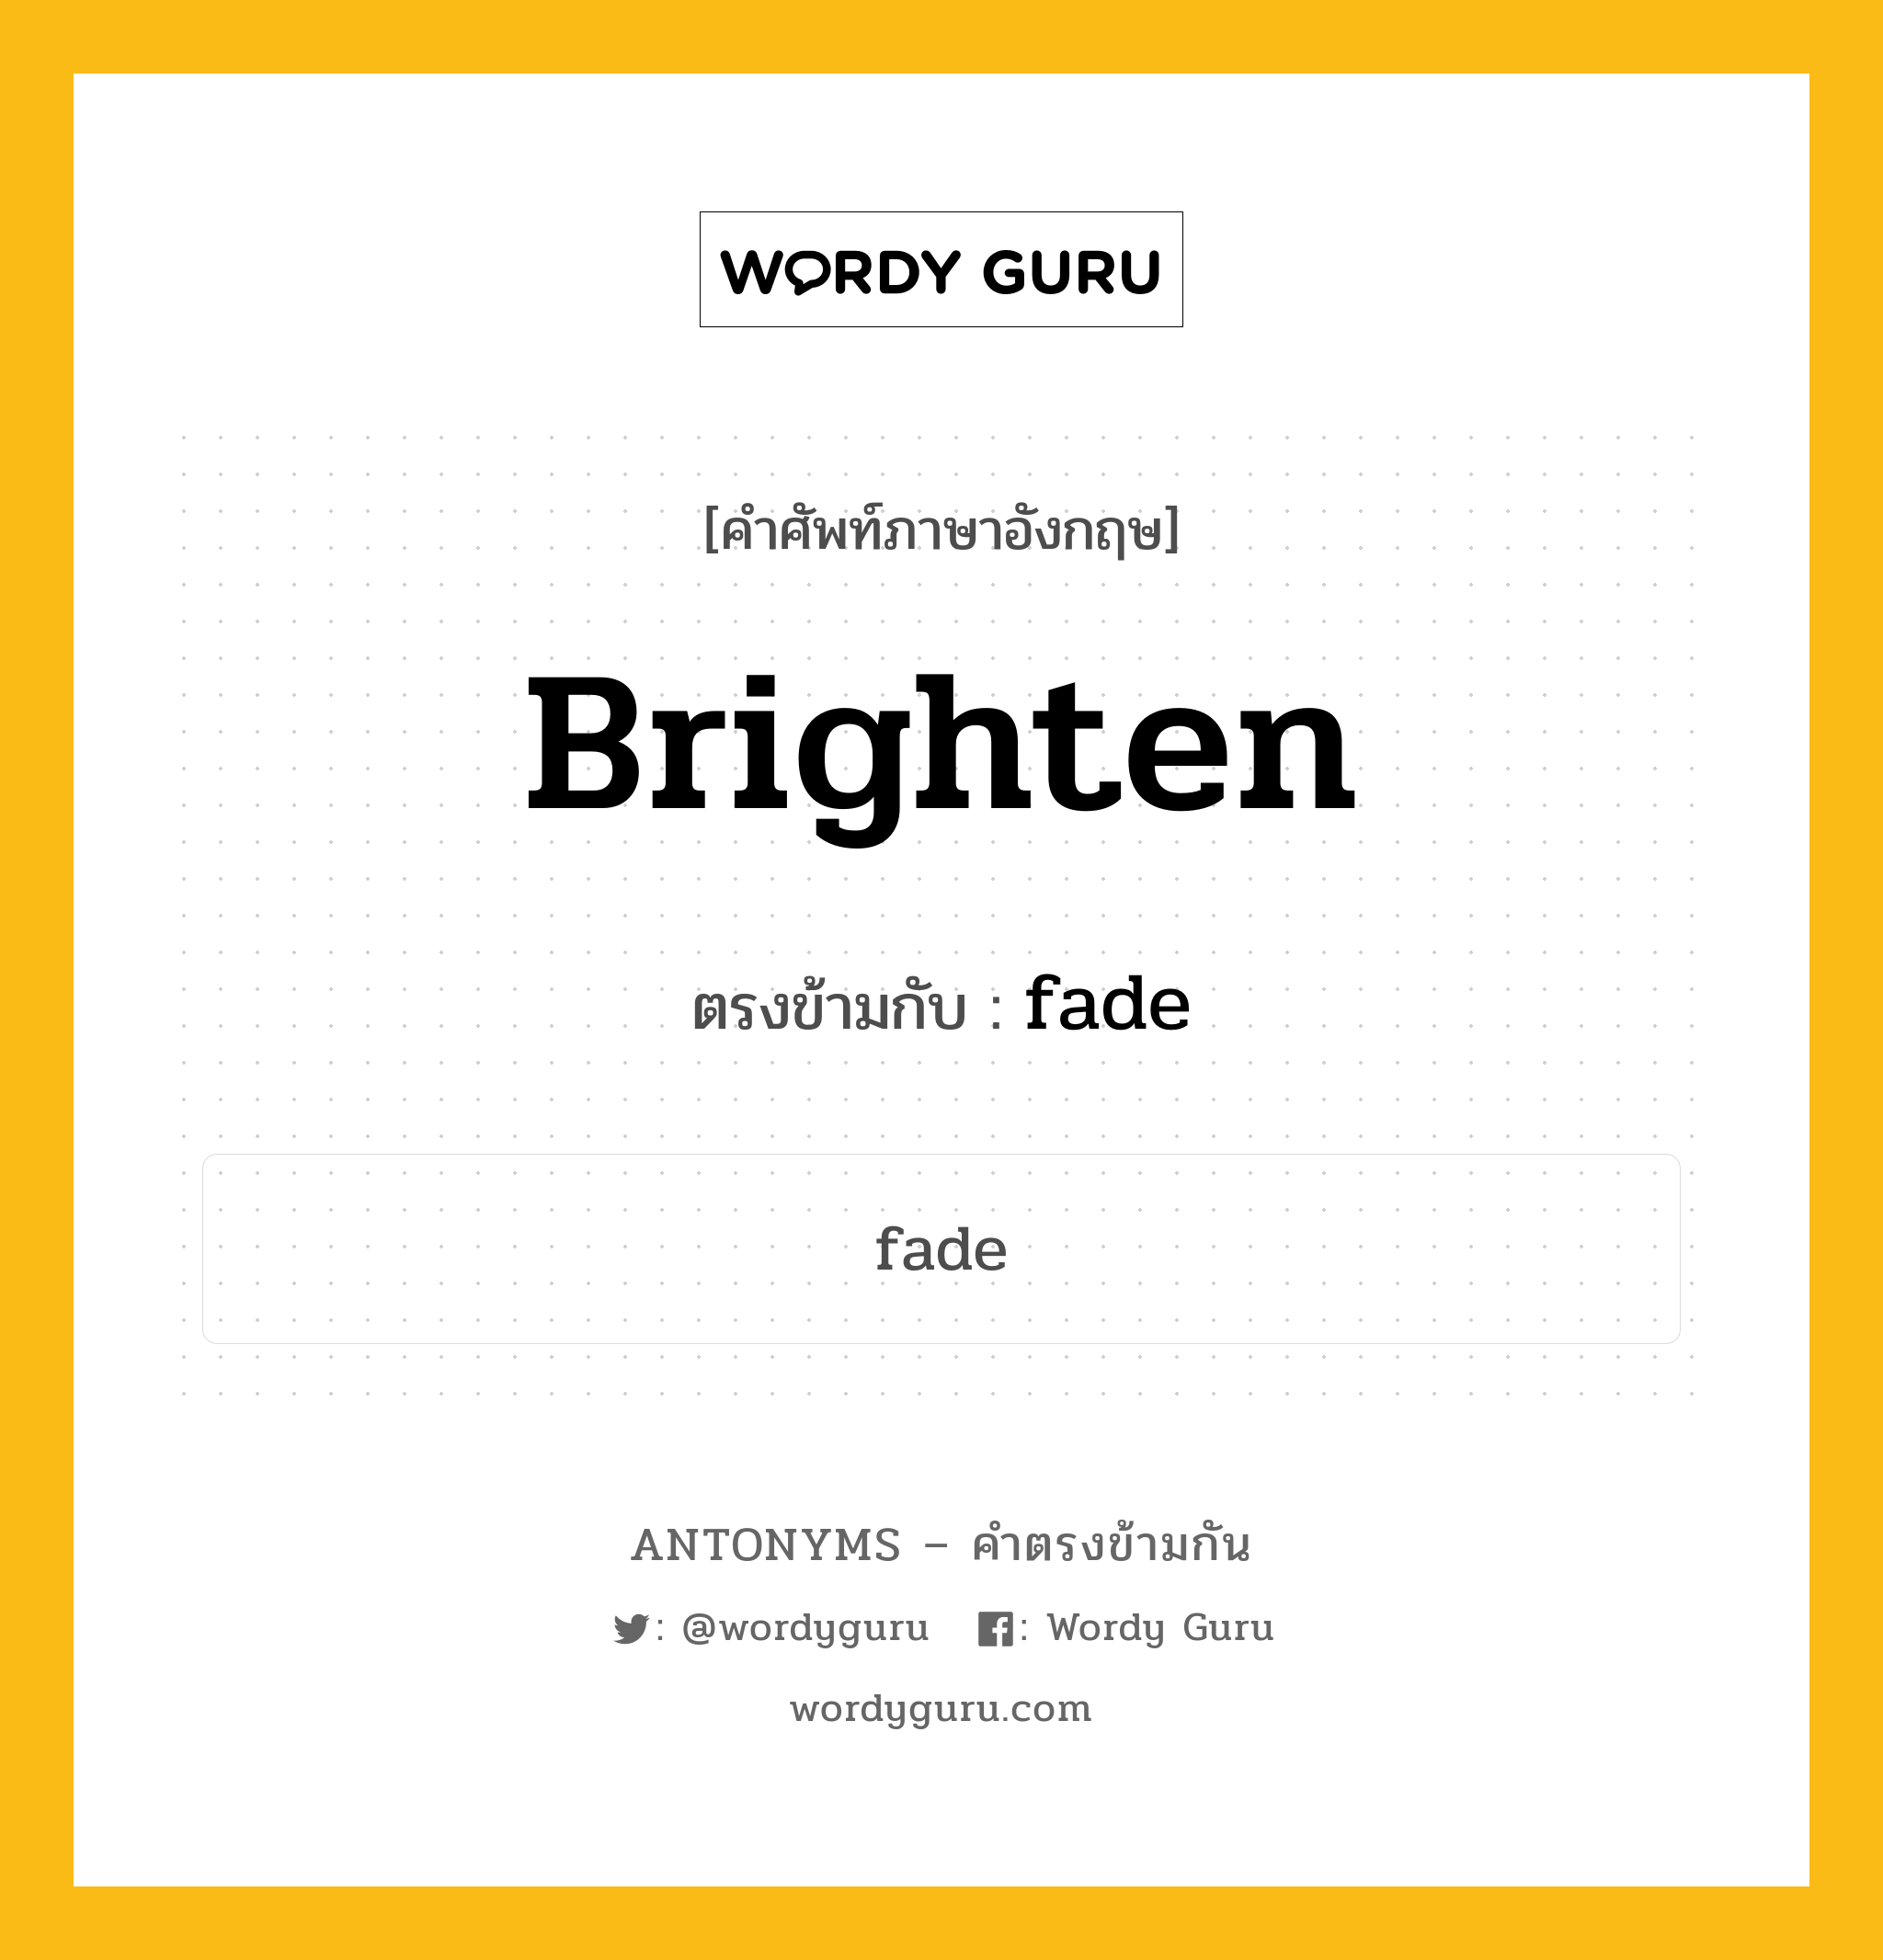 brighten เป็นคำตรงข้ามกับคำไหนบ้าง?, คำศัพท์ภาษาอังกฤษ brighten ตรงข้ามกับ fade หมวด fade